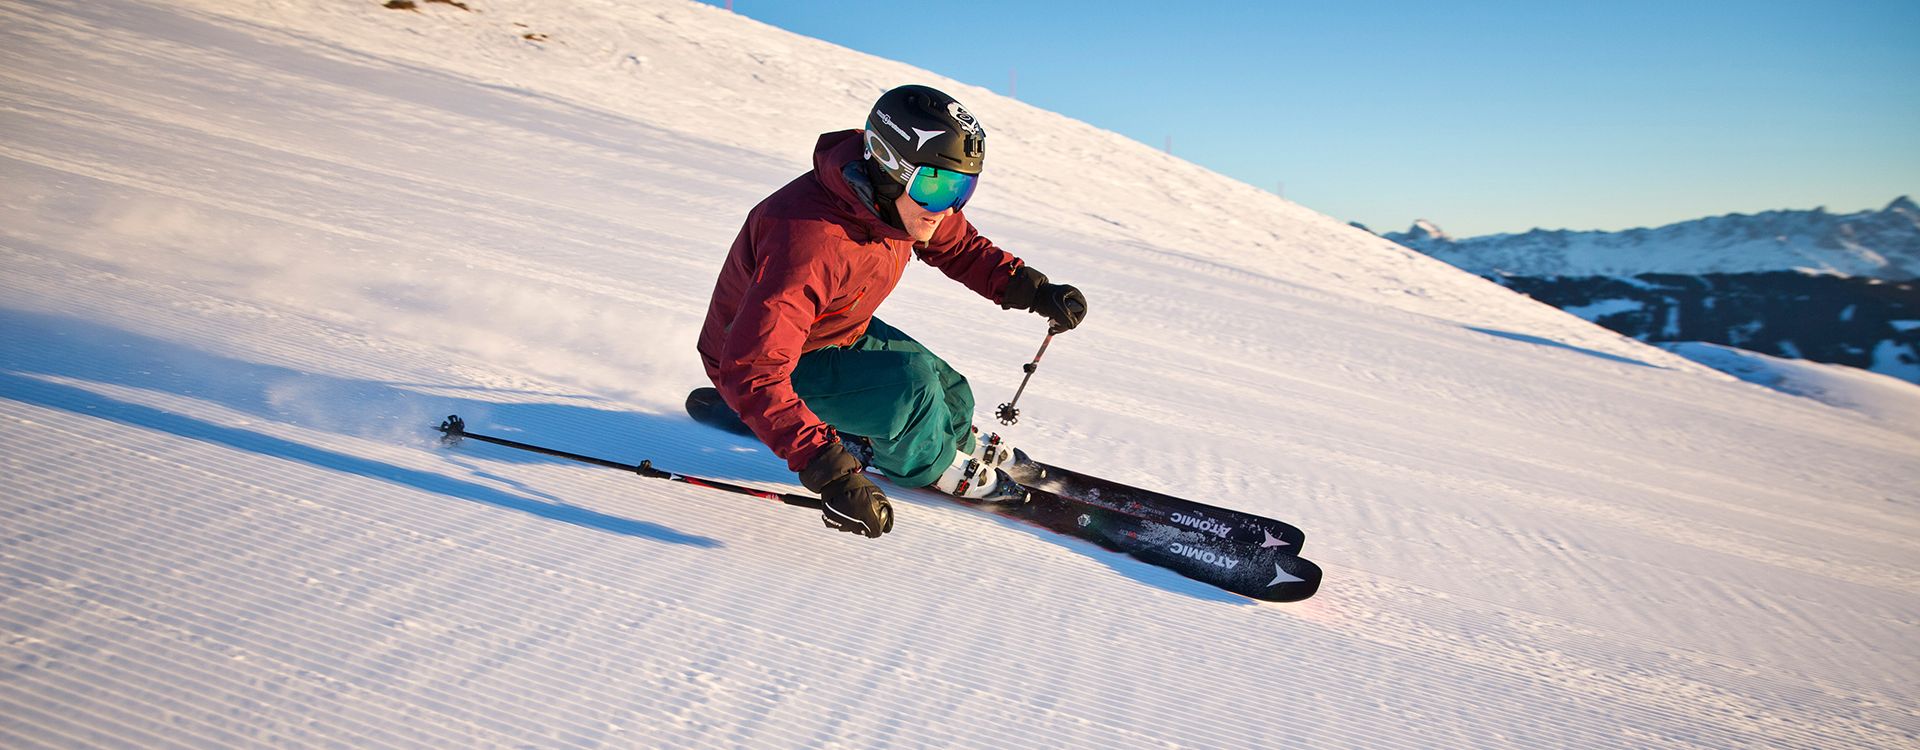 Skifahren Im Skicircus Saalbach Hintergl 1 Kopie